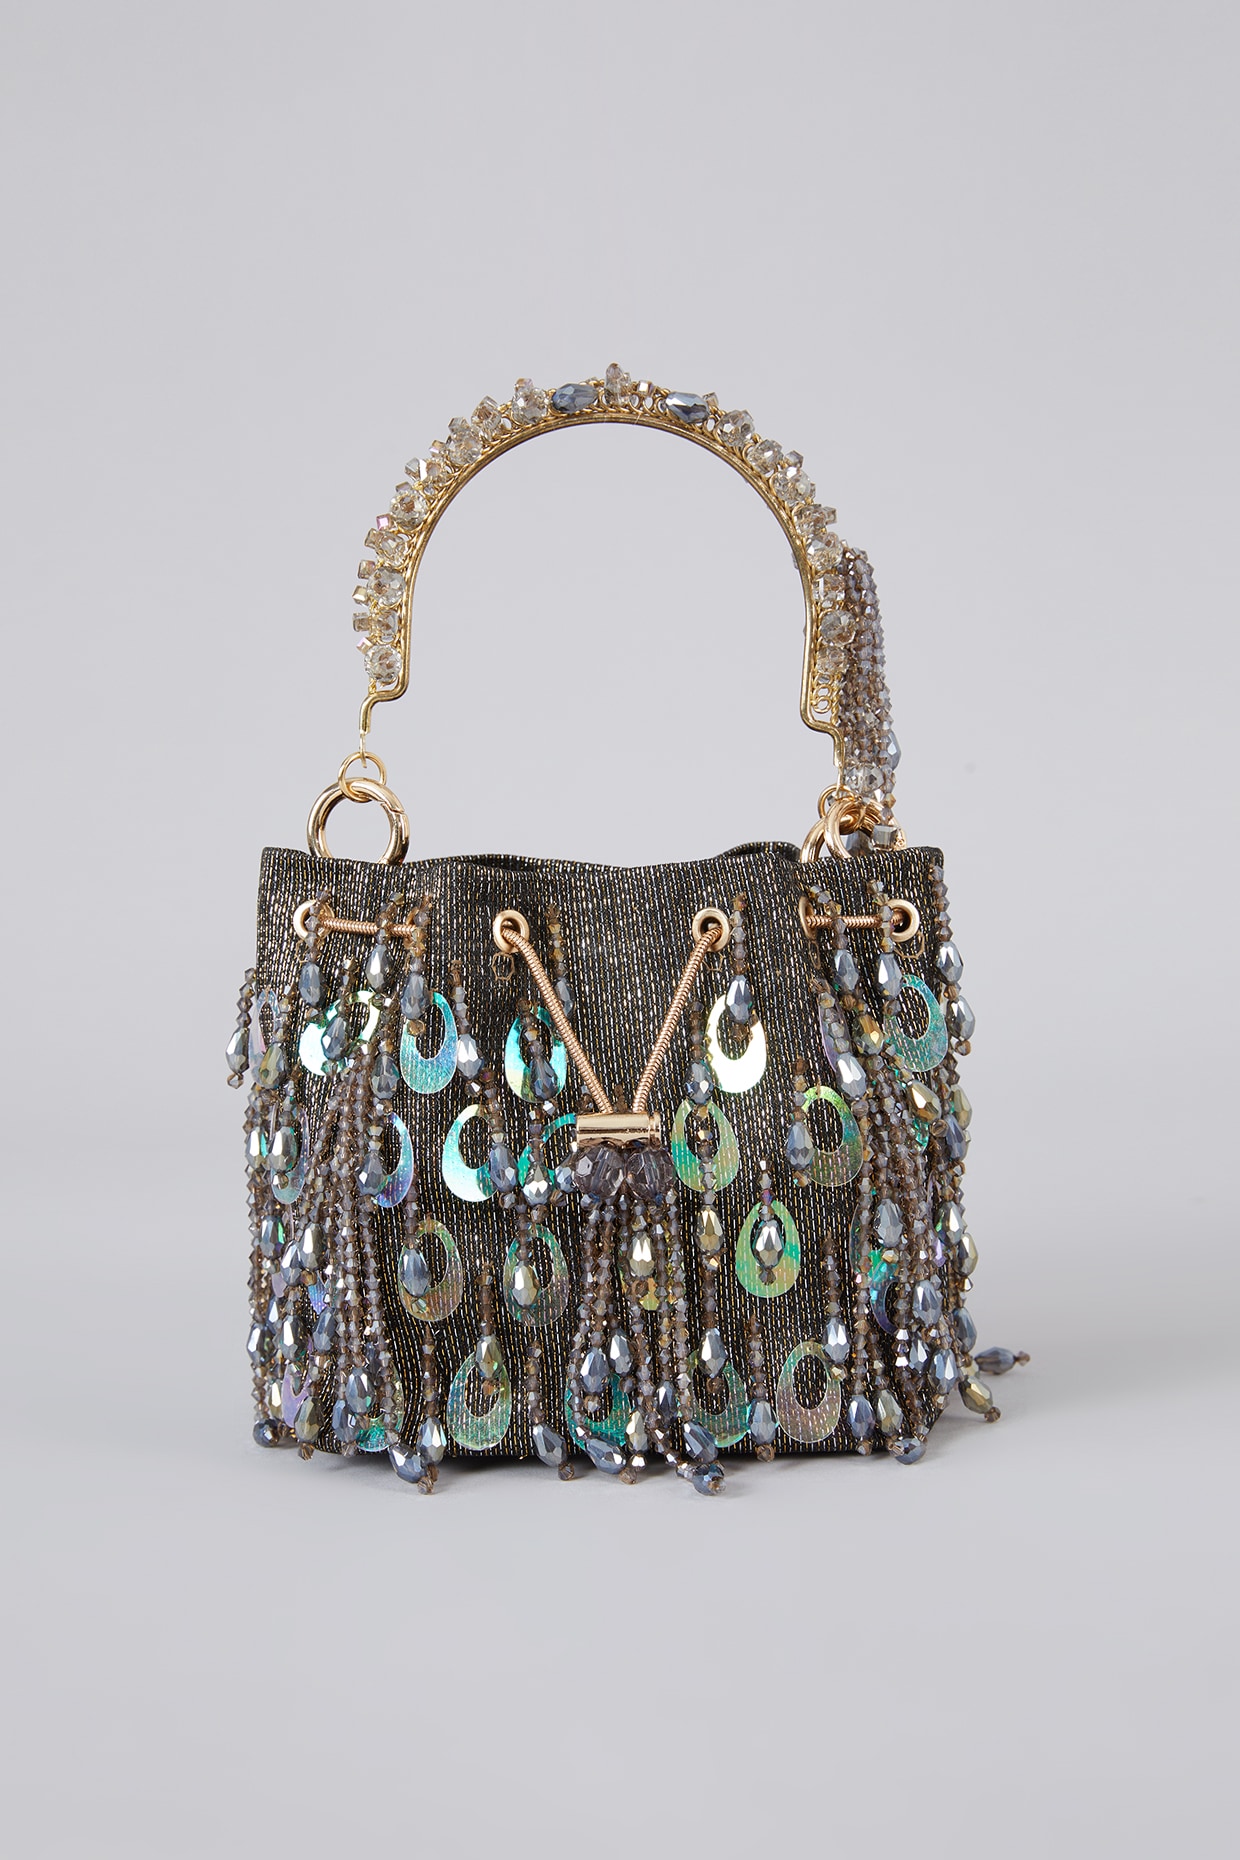 Buy Beige Lunan Handbag by Designer THE GARNISH COMPANY Online at Ogaan.com